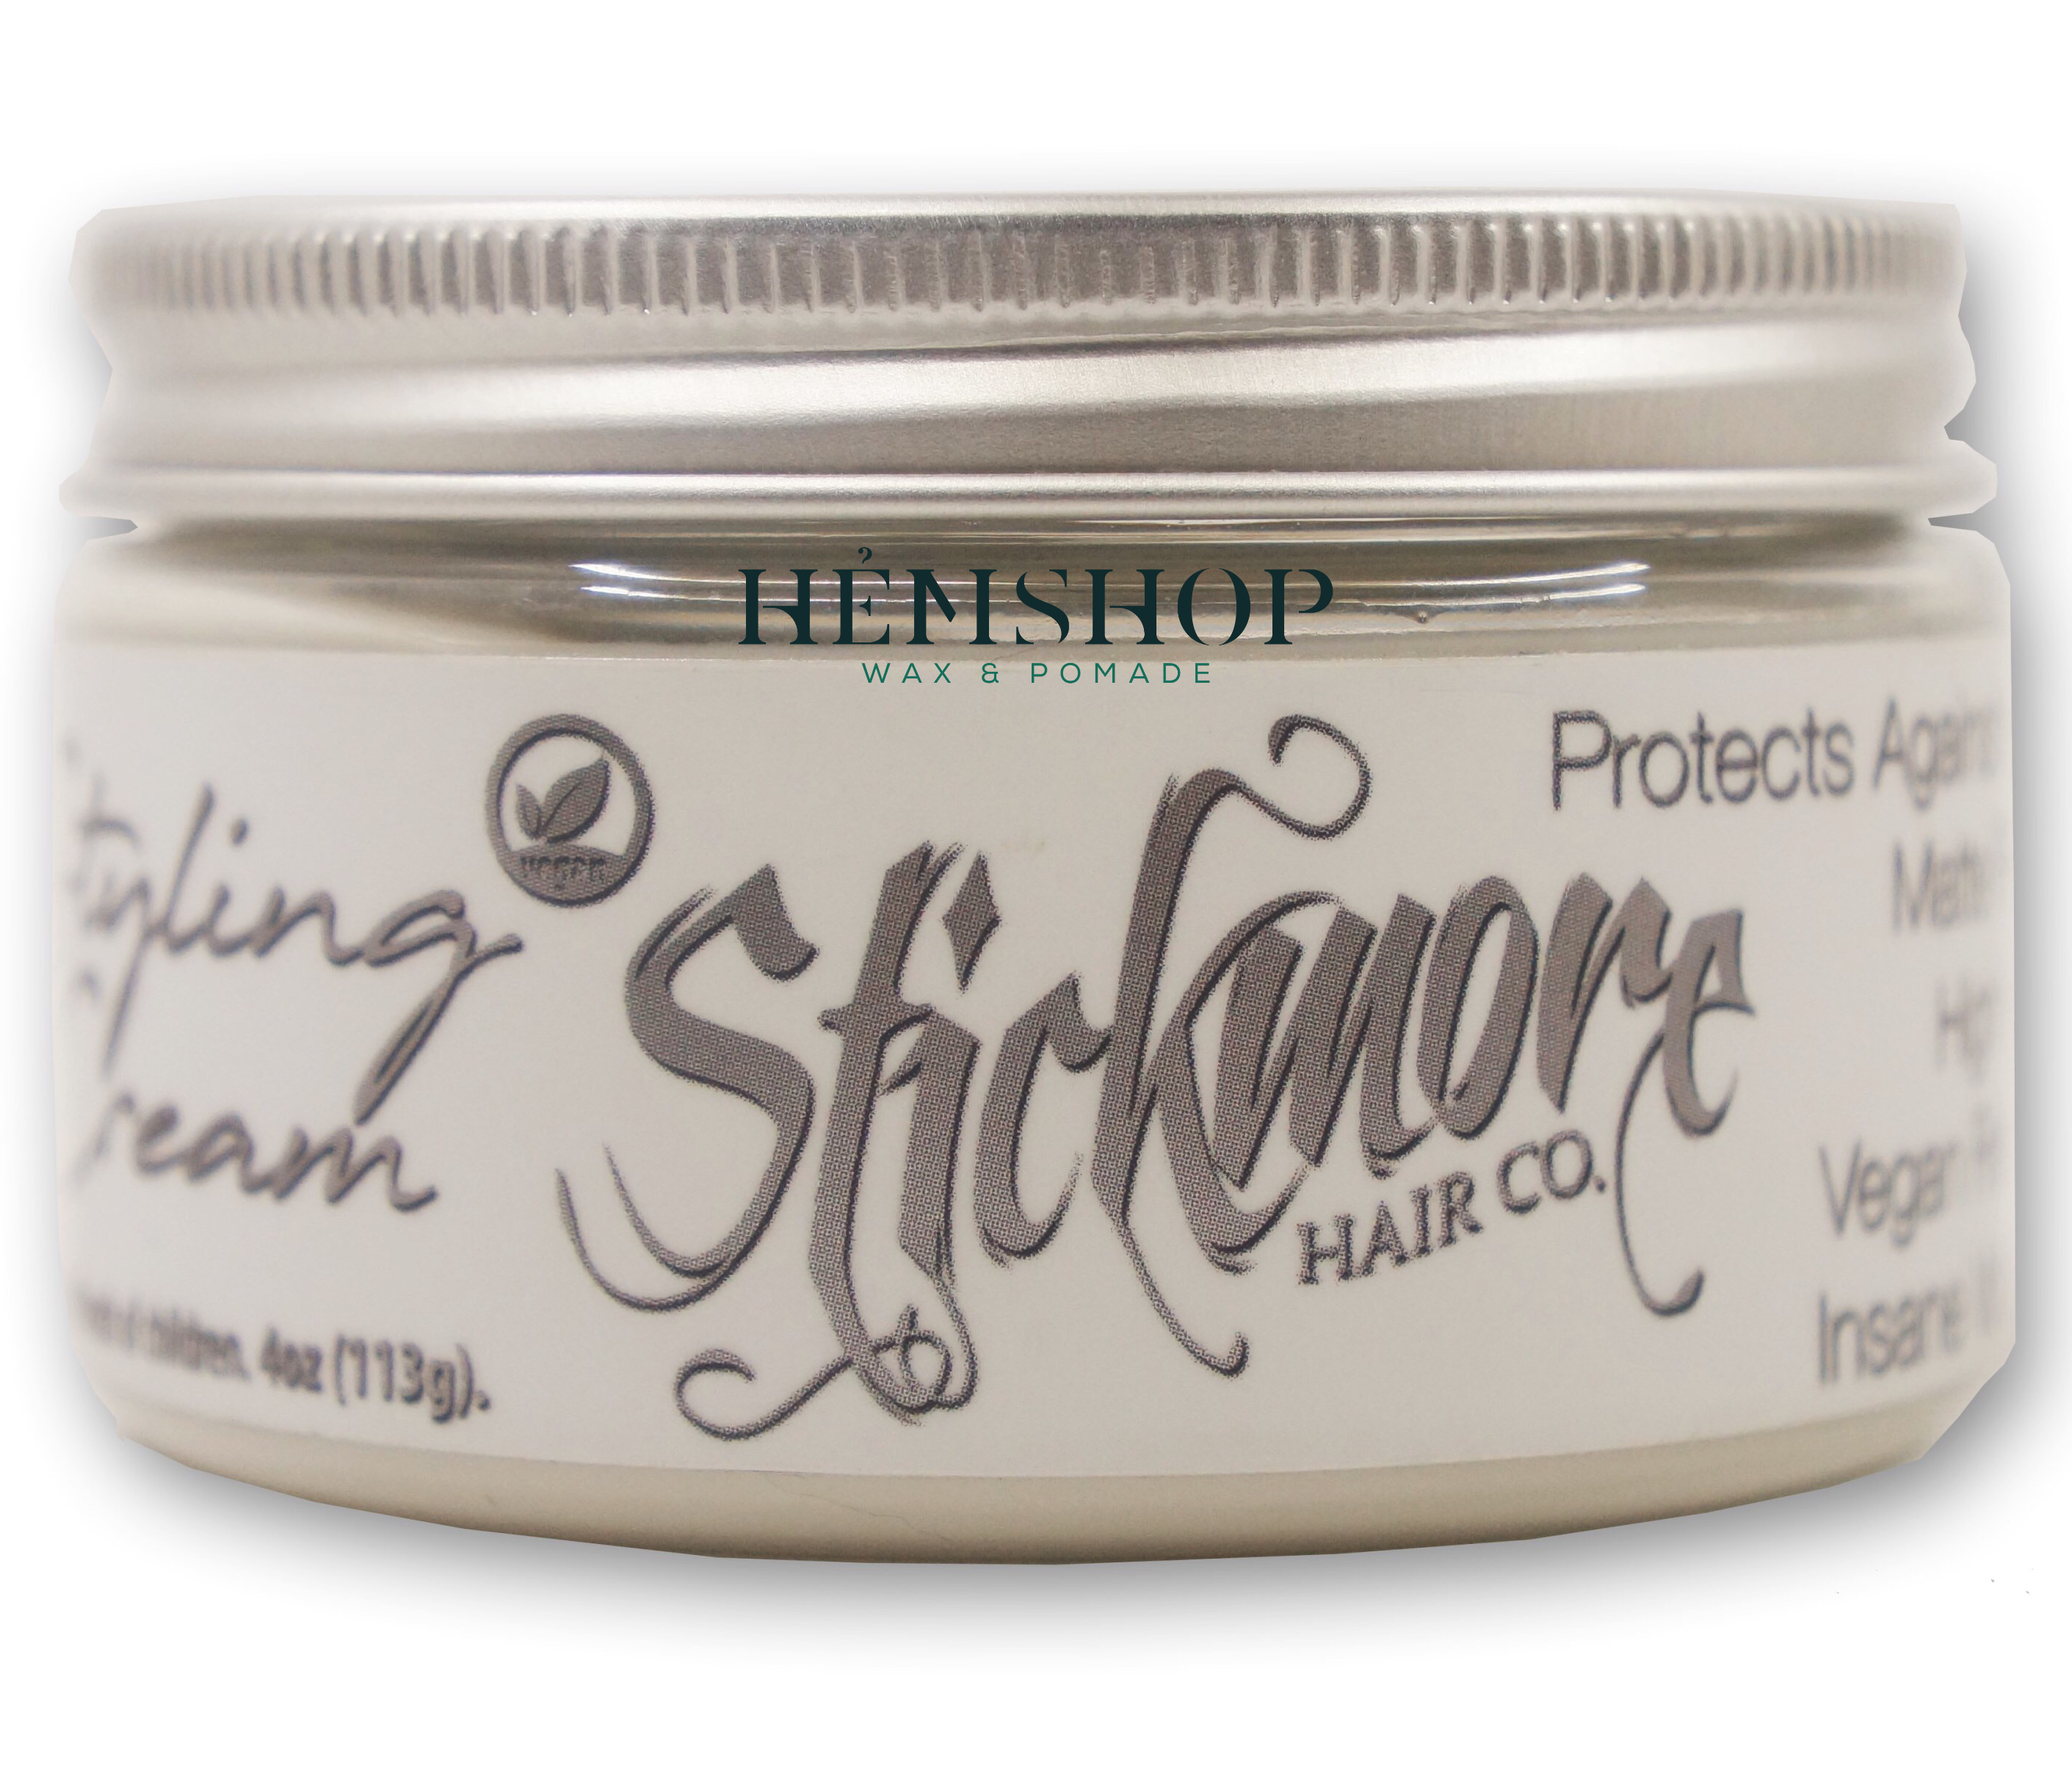 Stickmore Cream